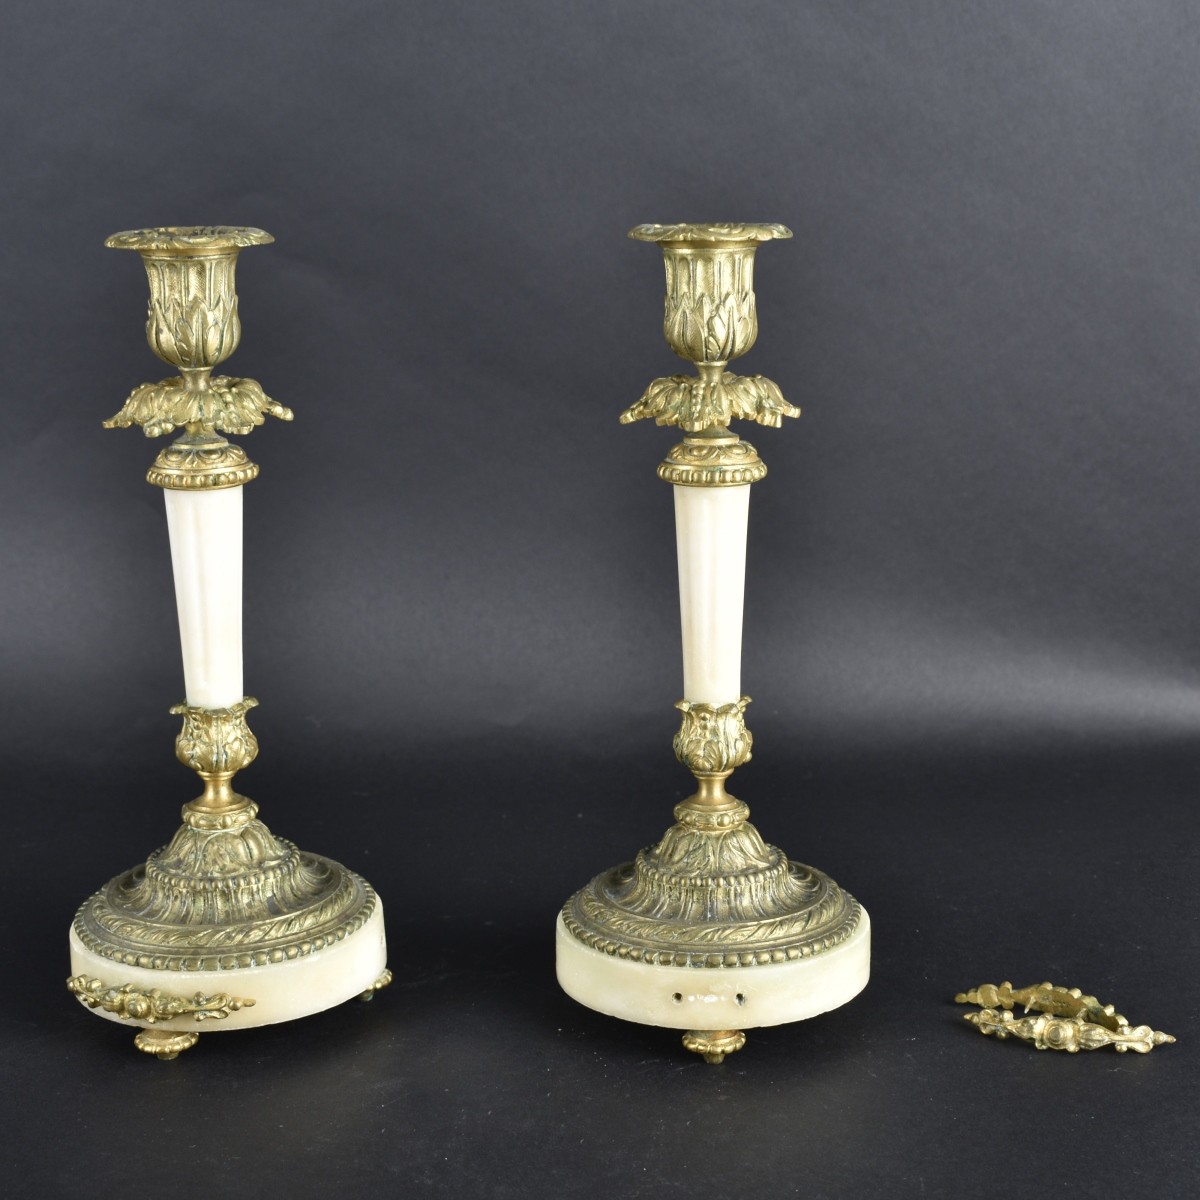 Bronze and Alabaster Candlesticks